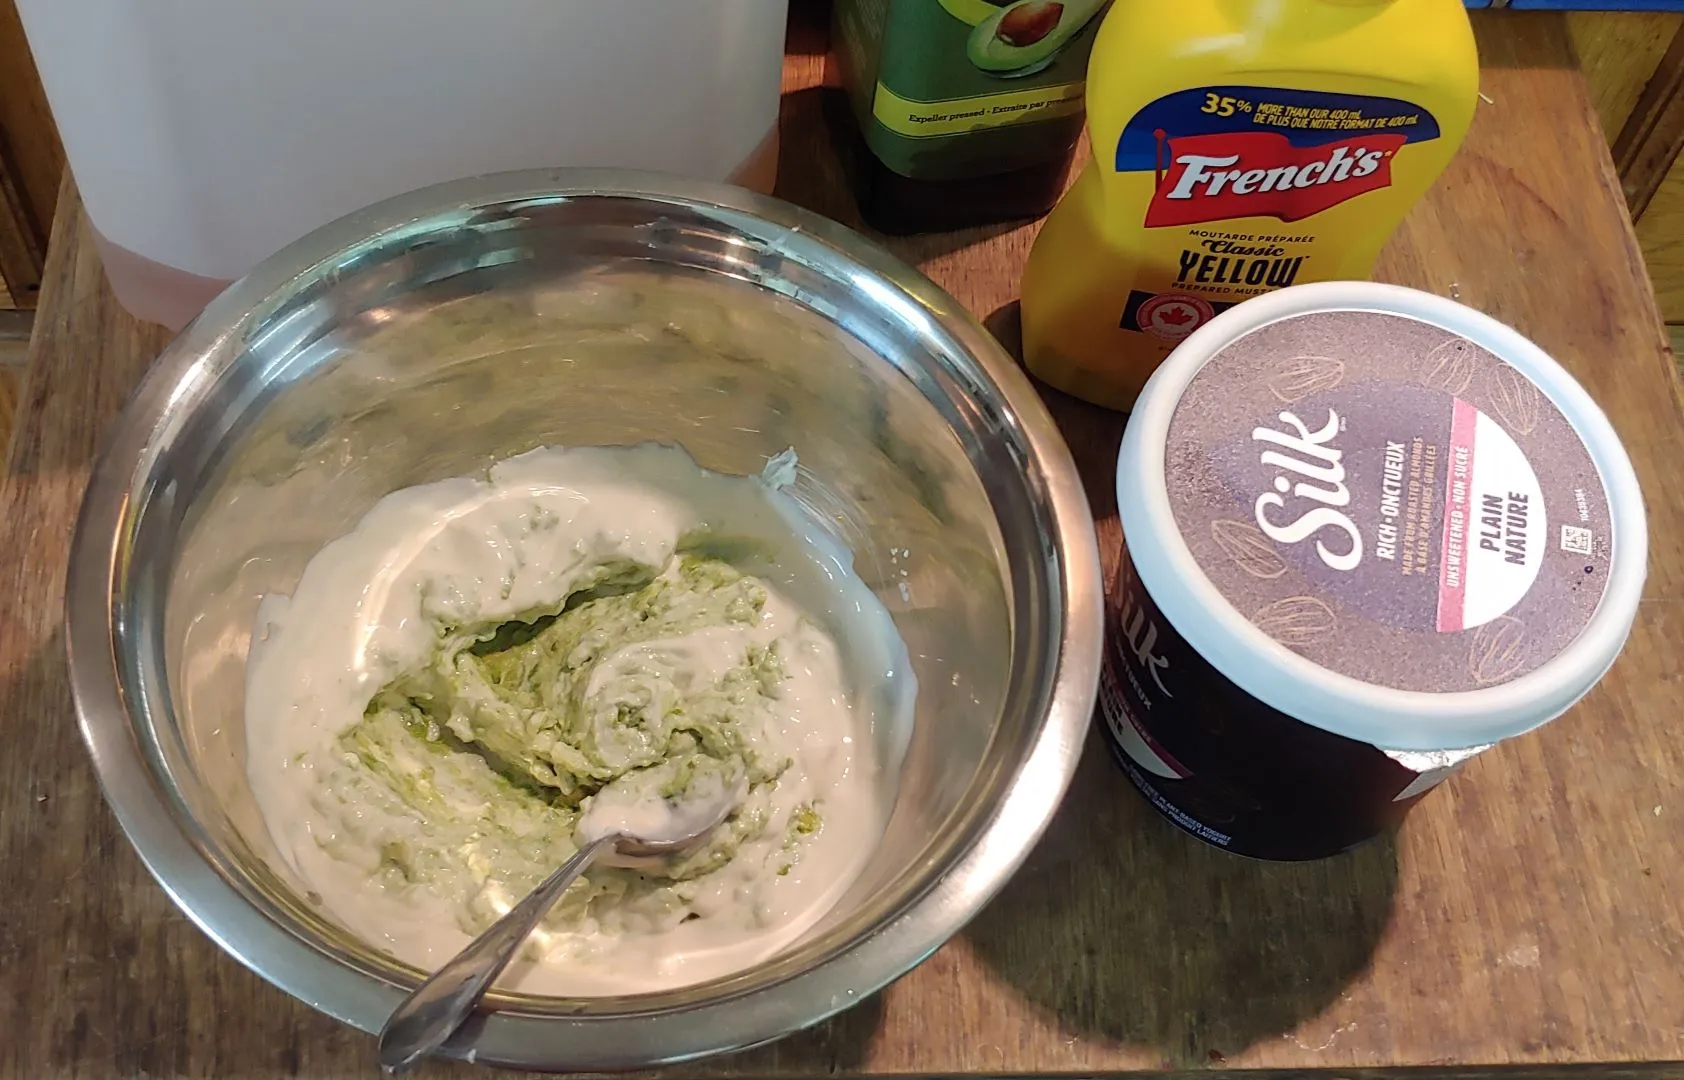 Yogurt - Mustard - Avocado - Oil - ACV